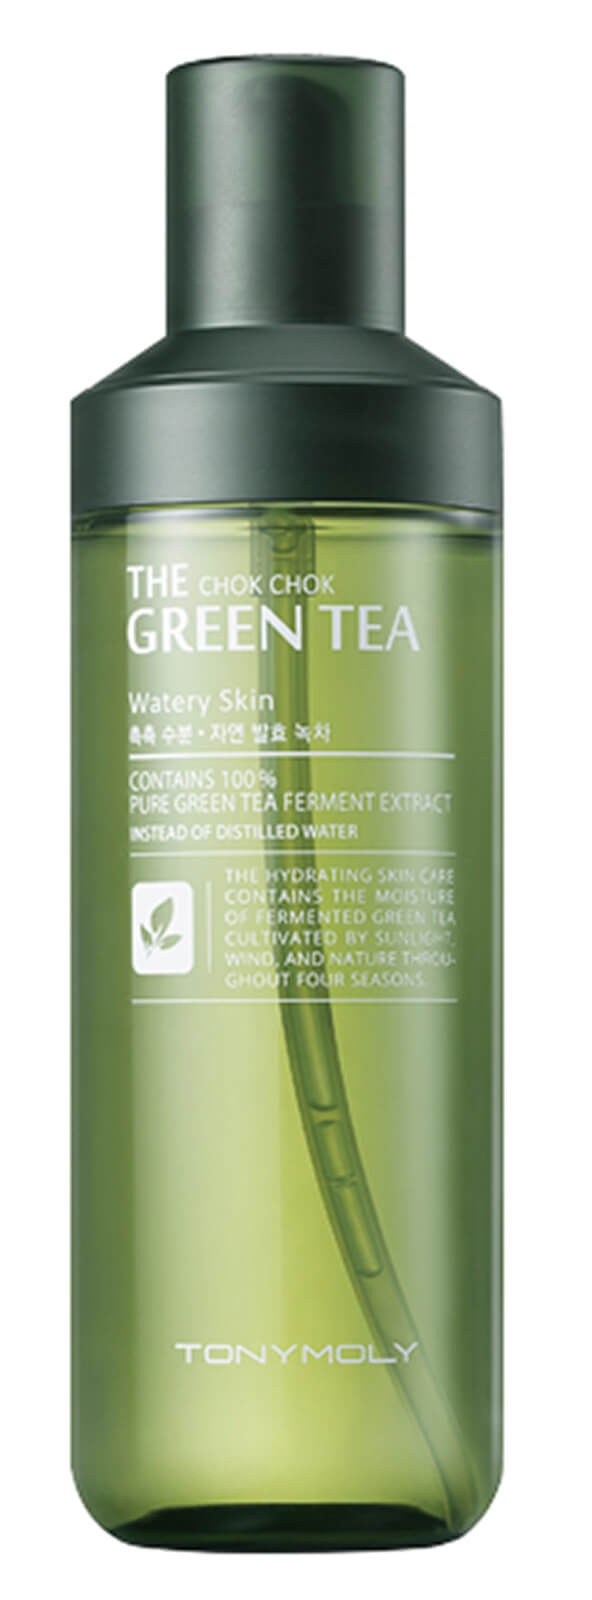 TonyMoly The Chok Chok Green Tea Watery Skin Toner